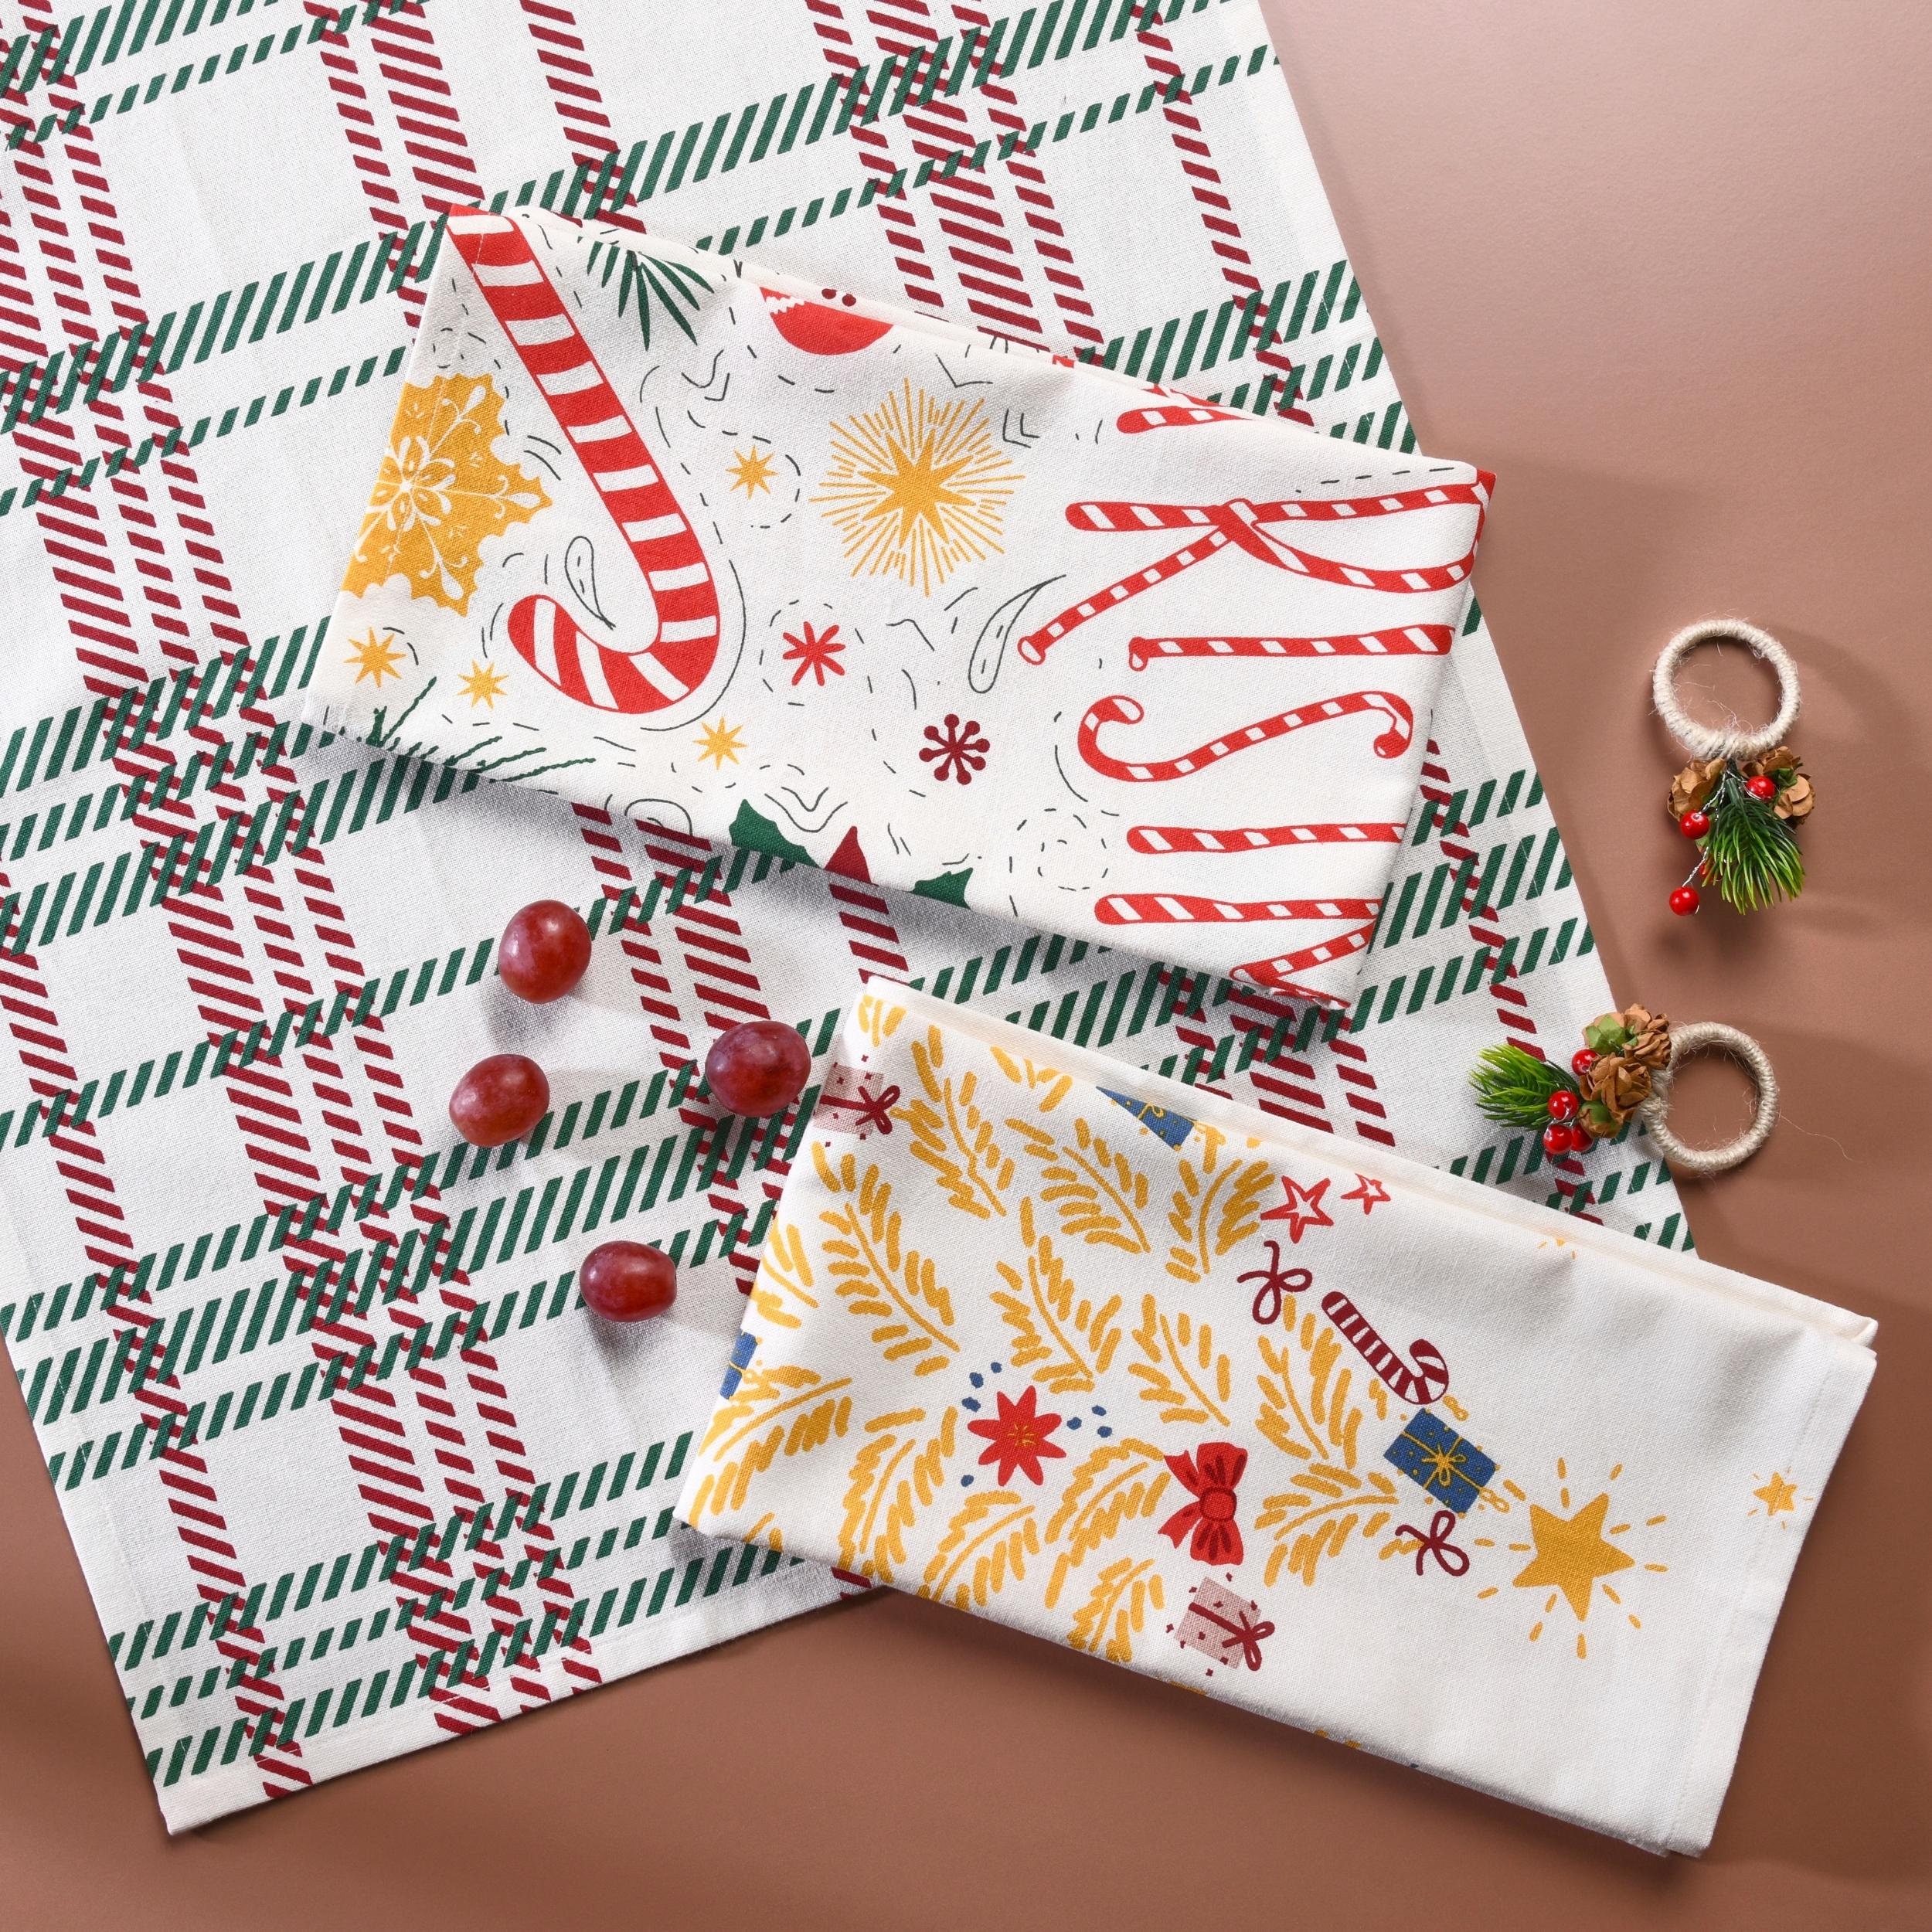 Folkulture Christmas Kitchen Towels Sets With Hanging Loop, Set of